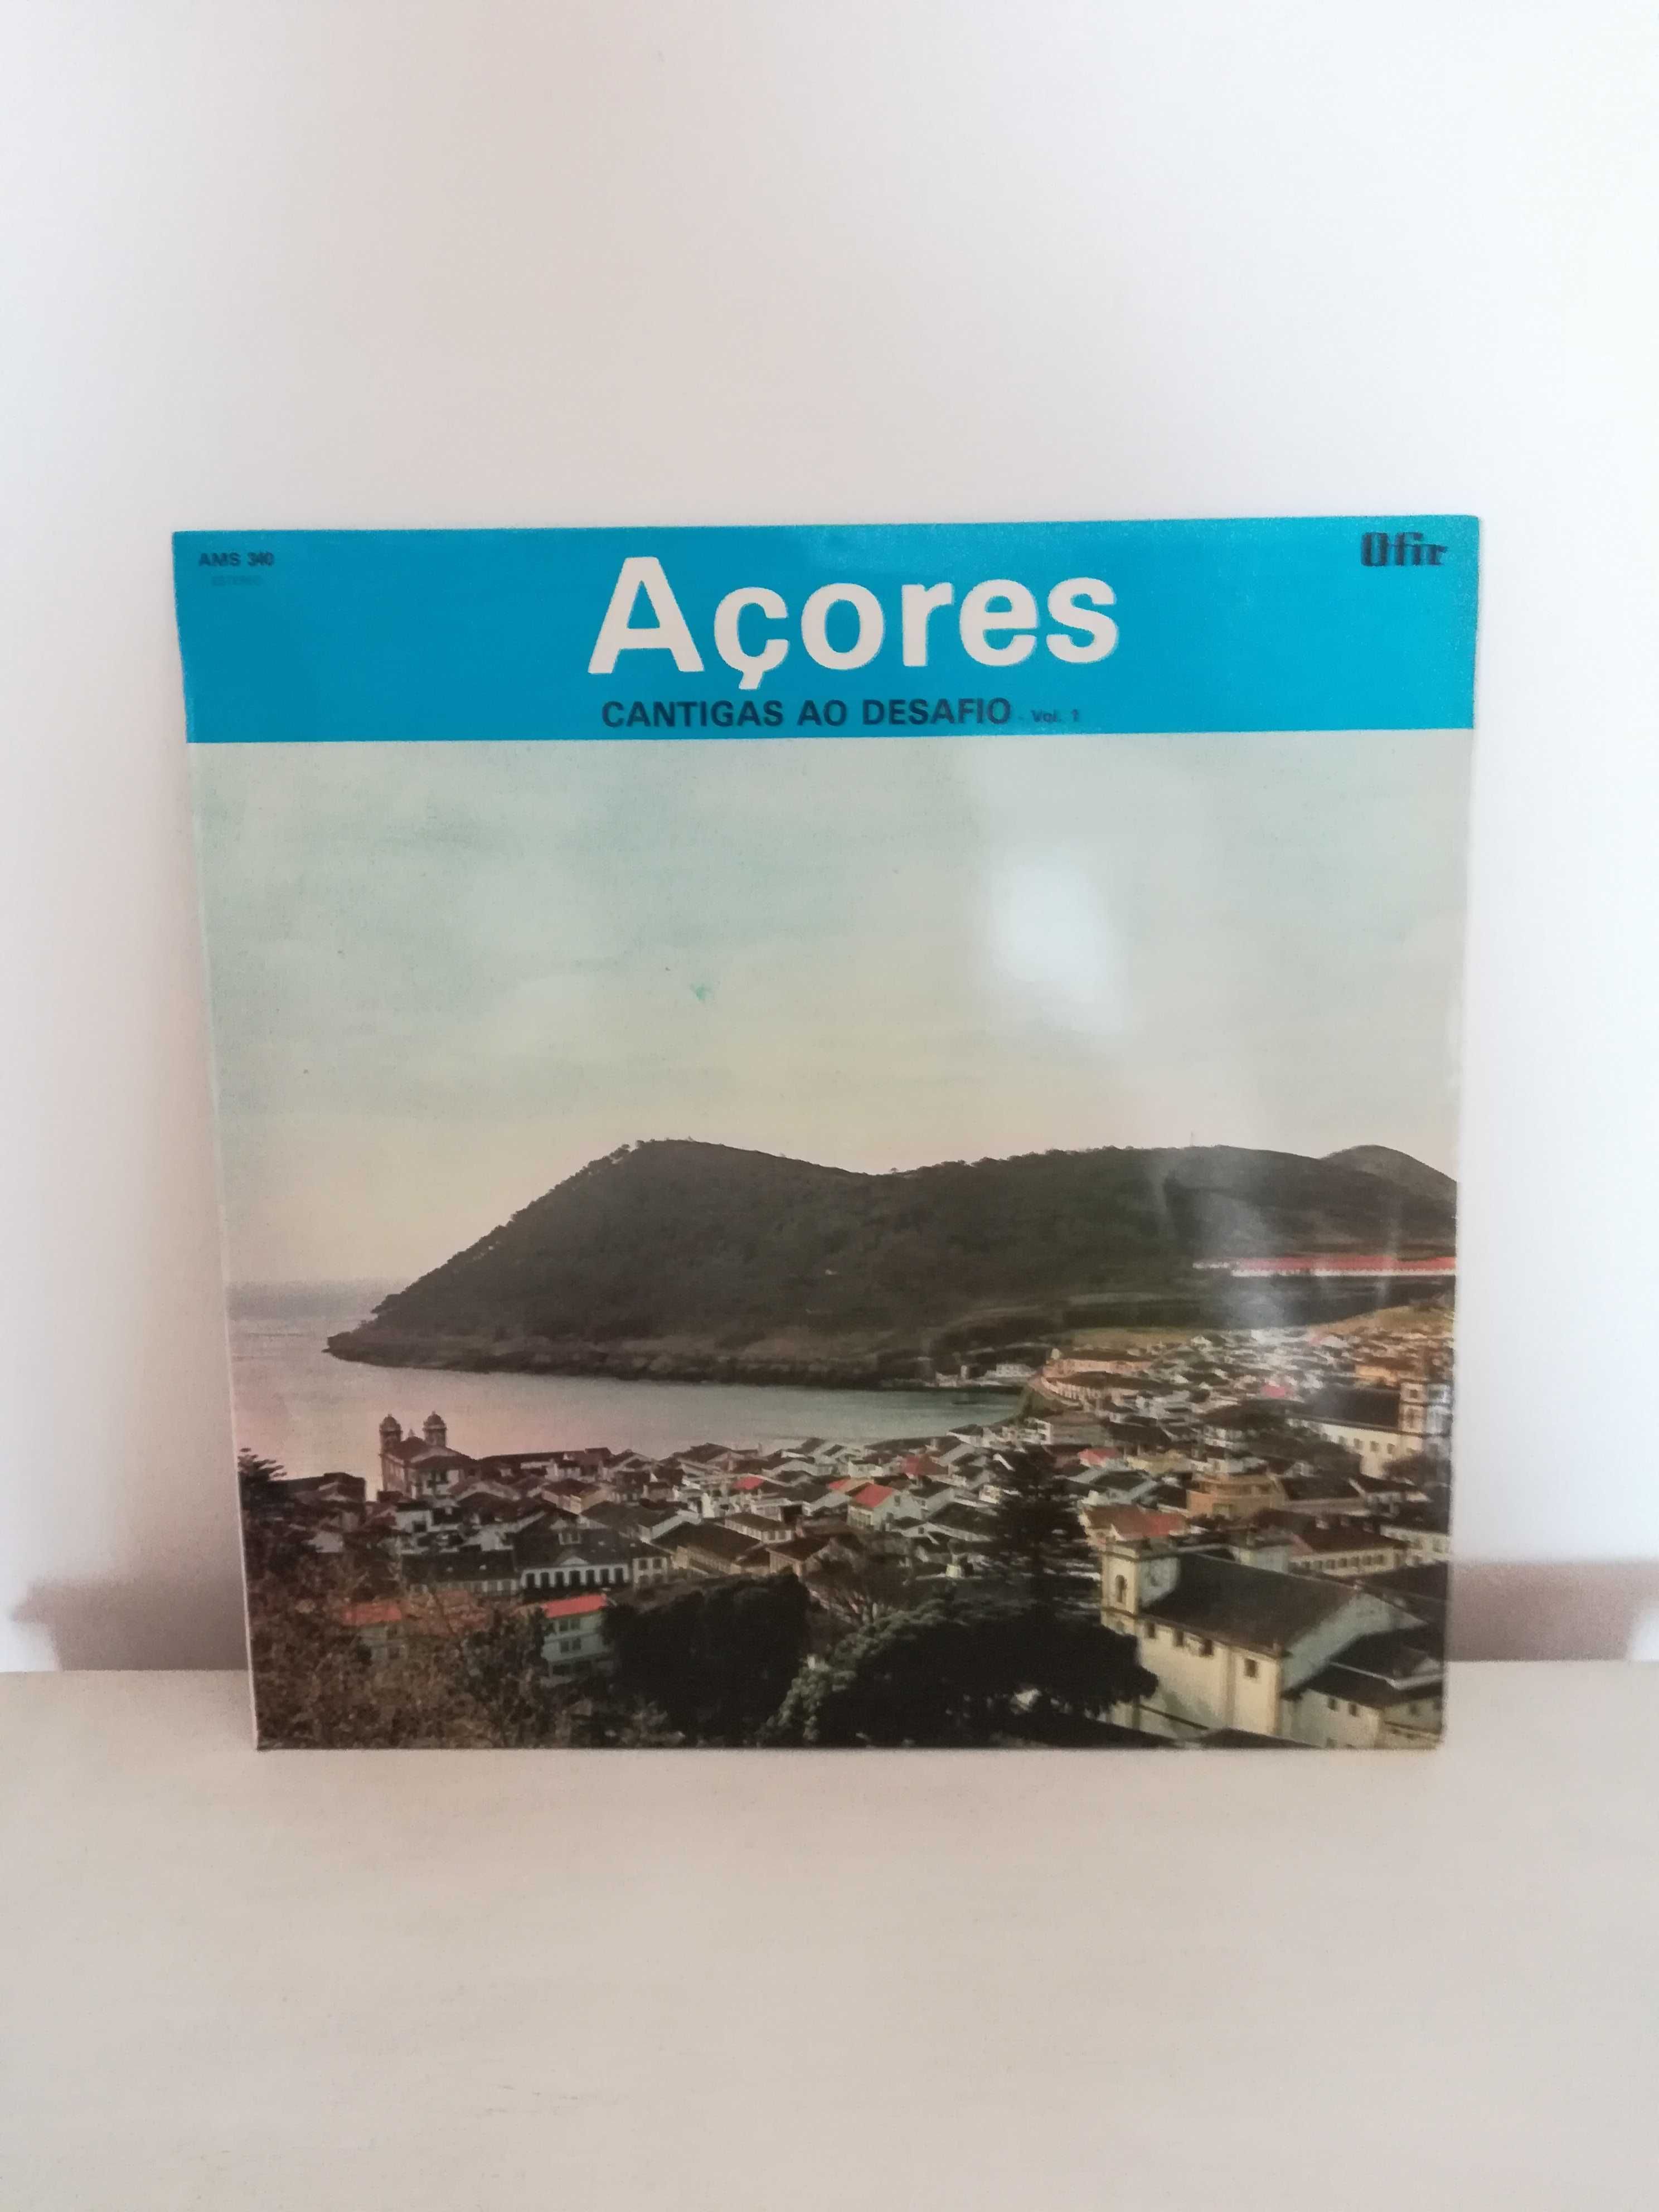 Açores música popular vinil